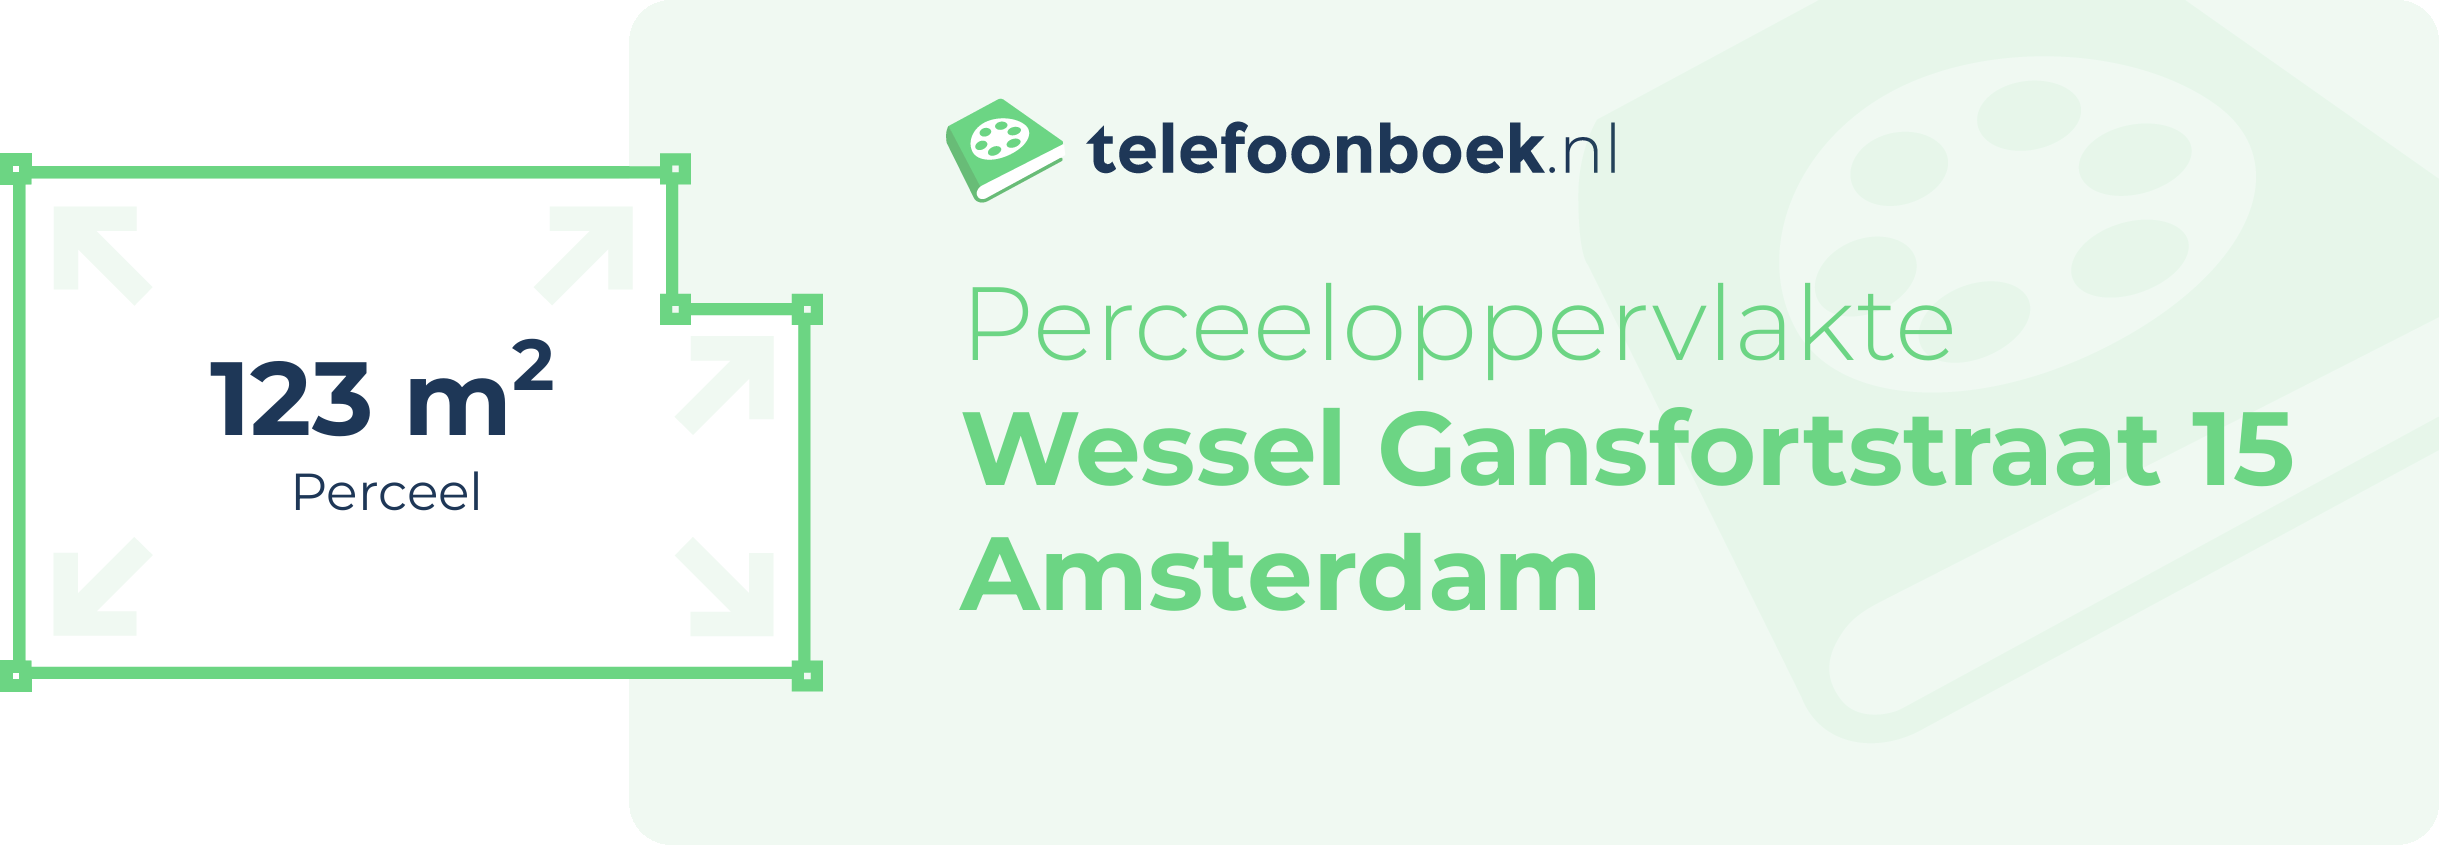 Perceeloppervlakte Wessel Gansfortstraat 15 Amsterdam